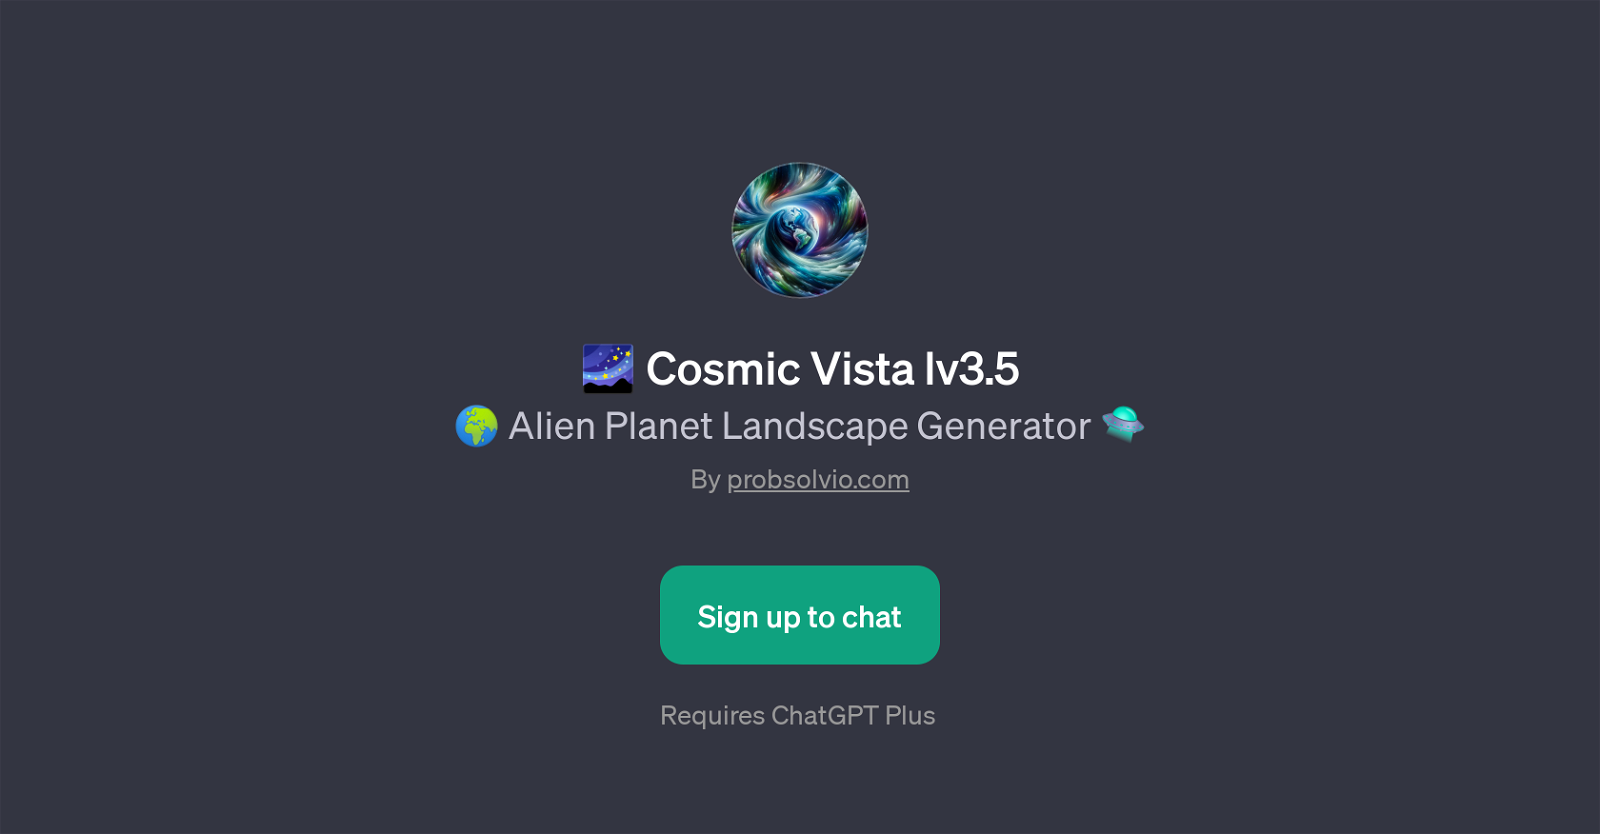 Cosmic Vista lv3.5 website